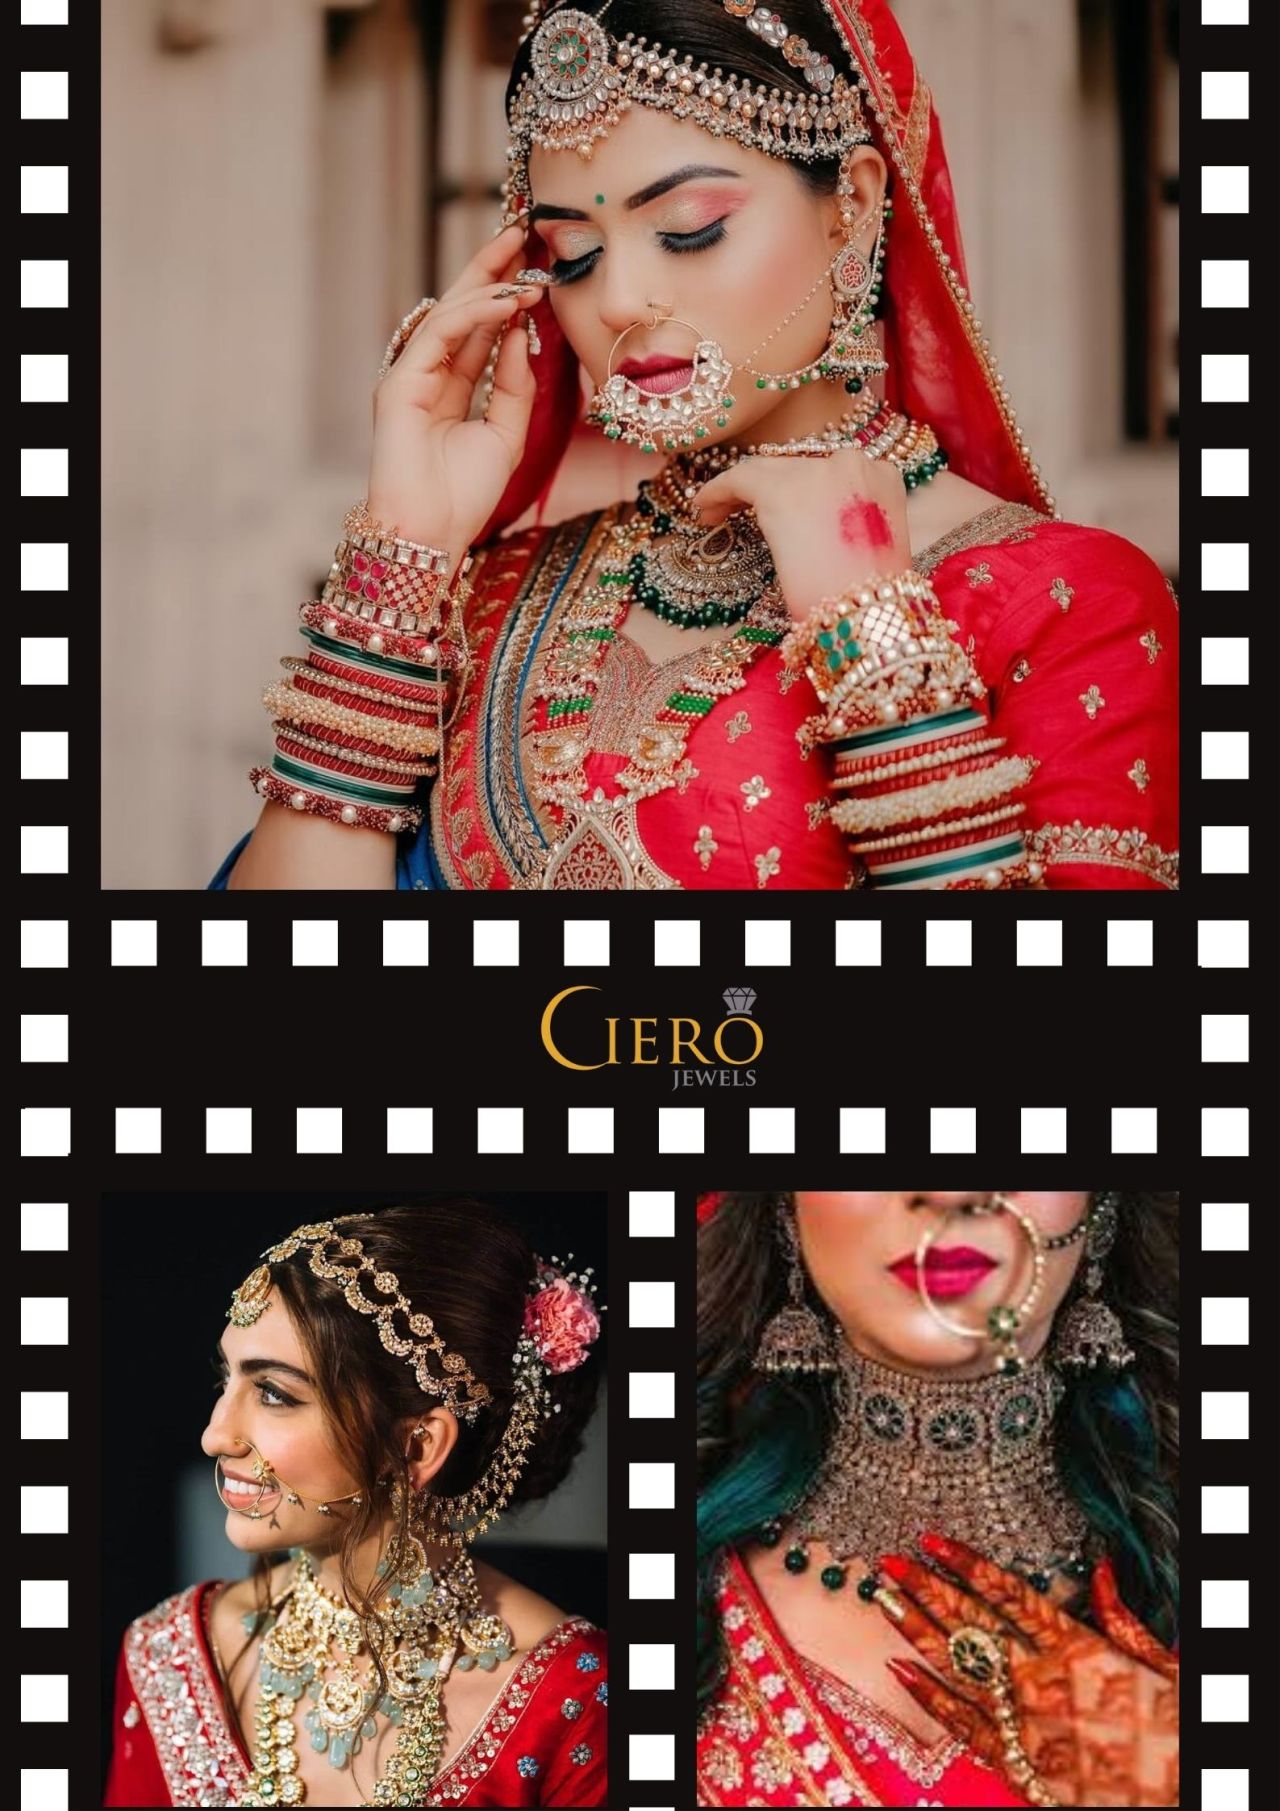 Ciero Jewels — Styling Nose Pins To Match Your Fashion Statement...